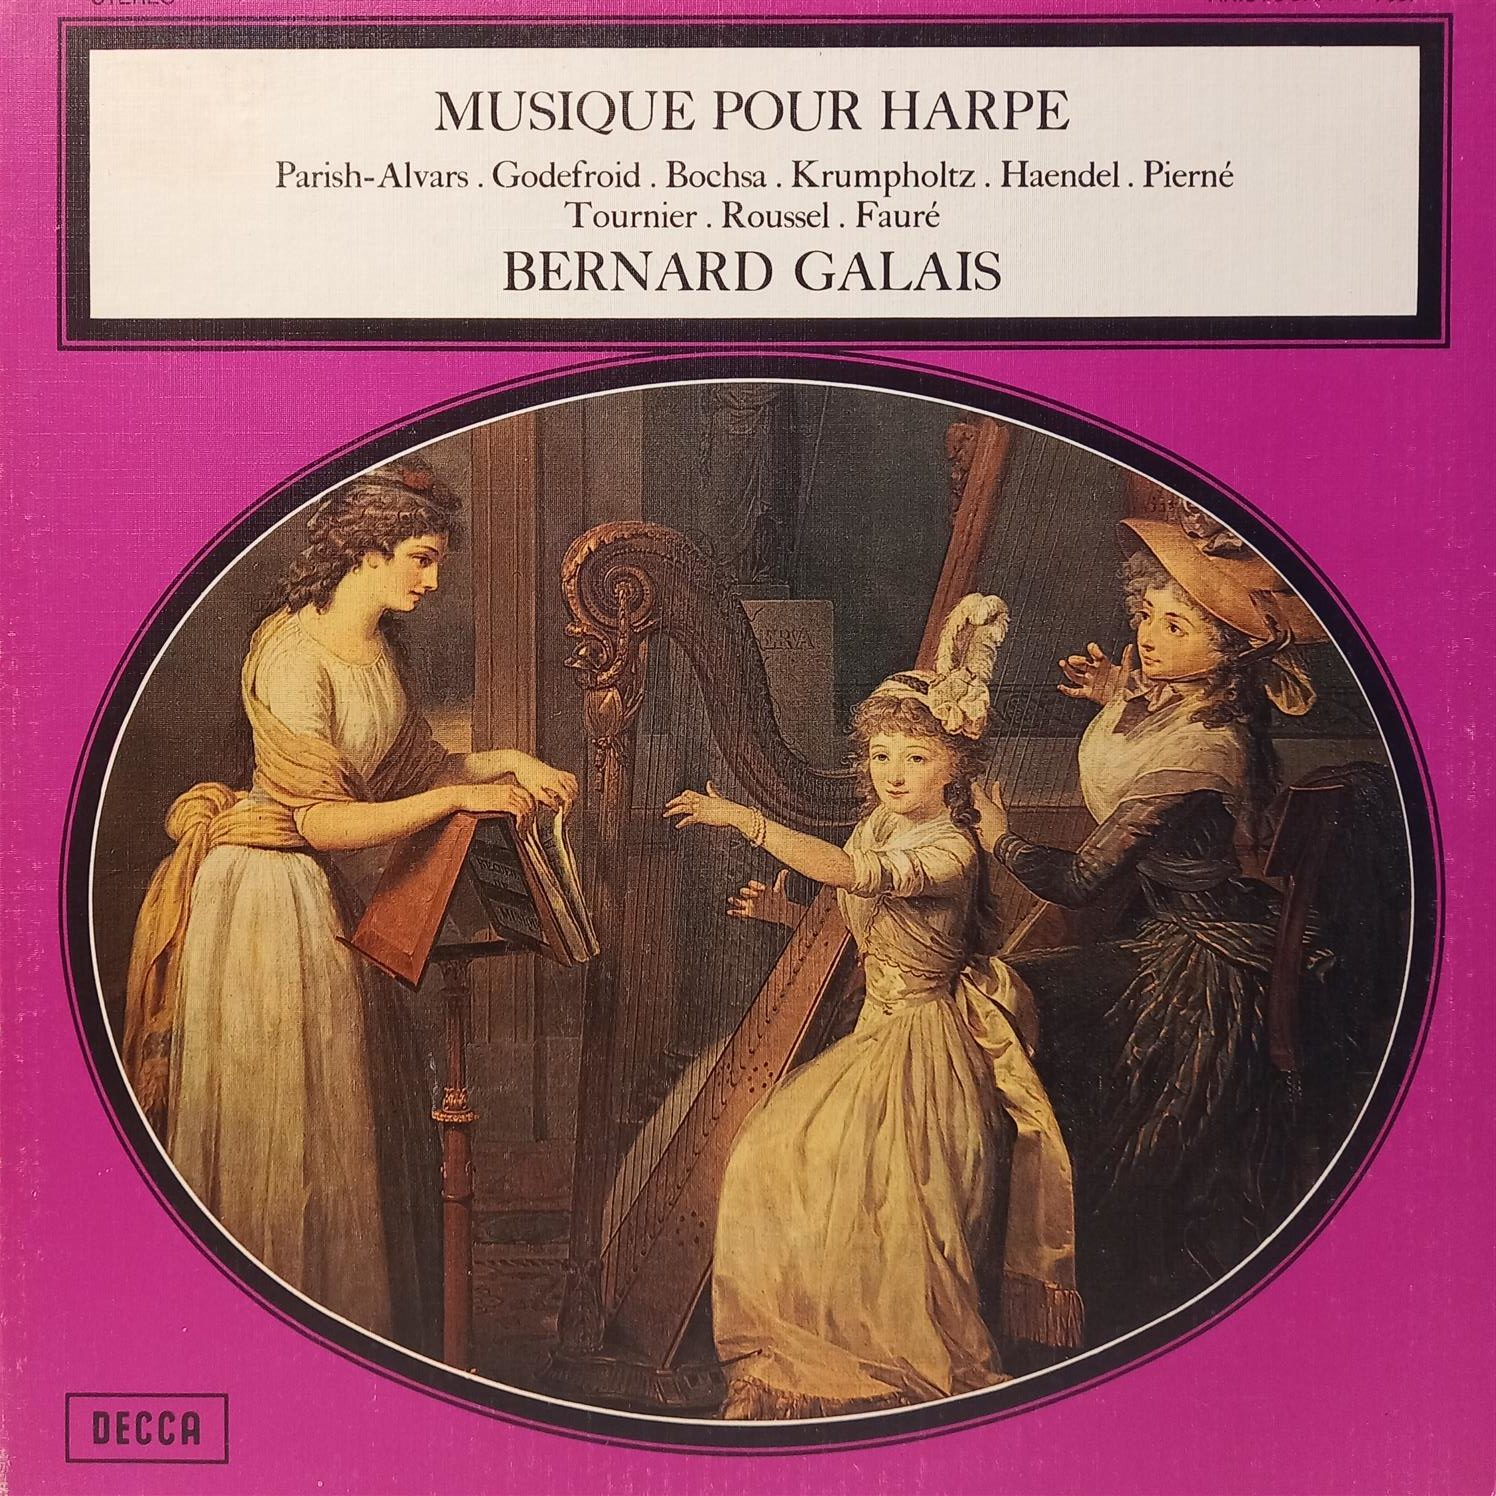 BERNARD GALAIS – MUSIQUE POUR HARPE ON